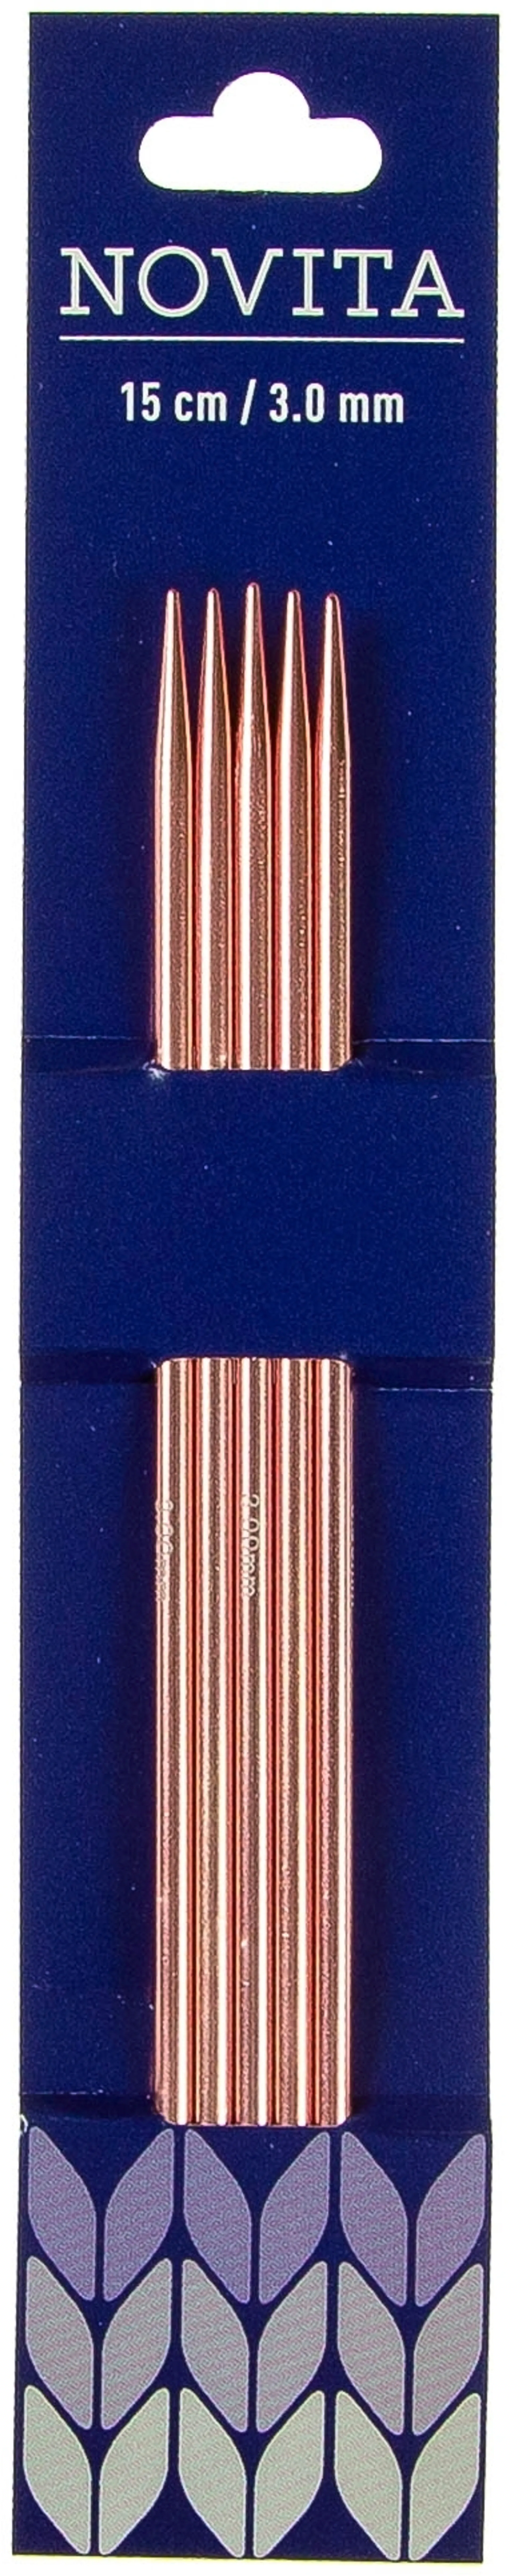 Novita Sukkapuikot 15cm - 3 mm v.punainen